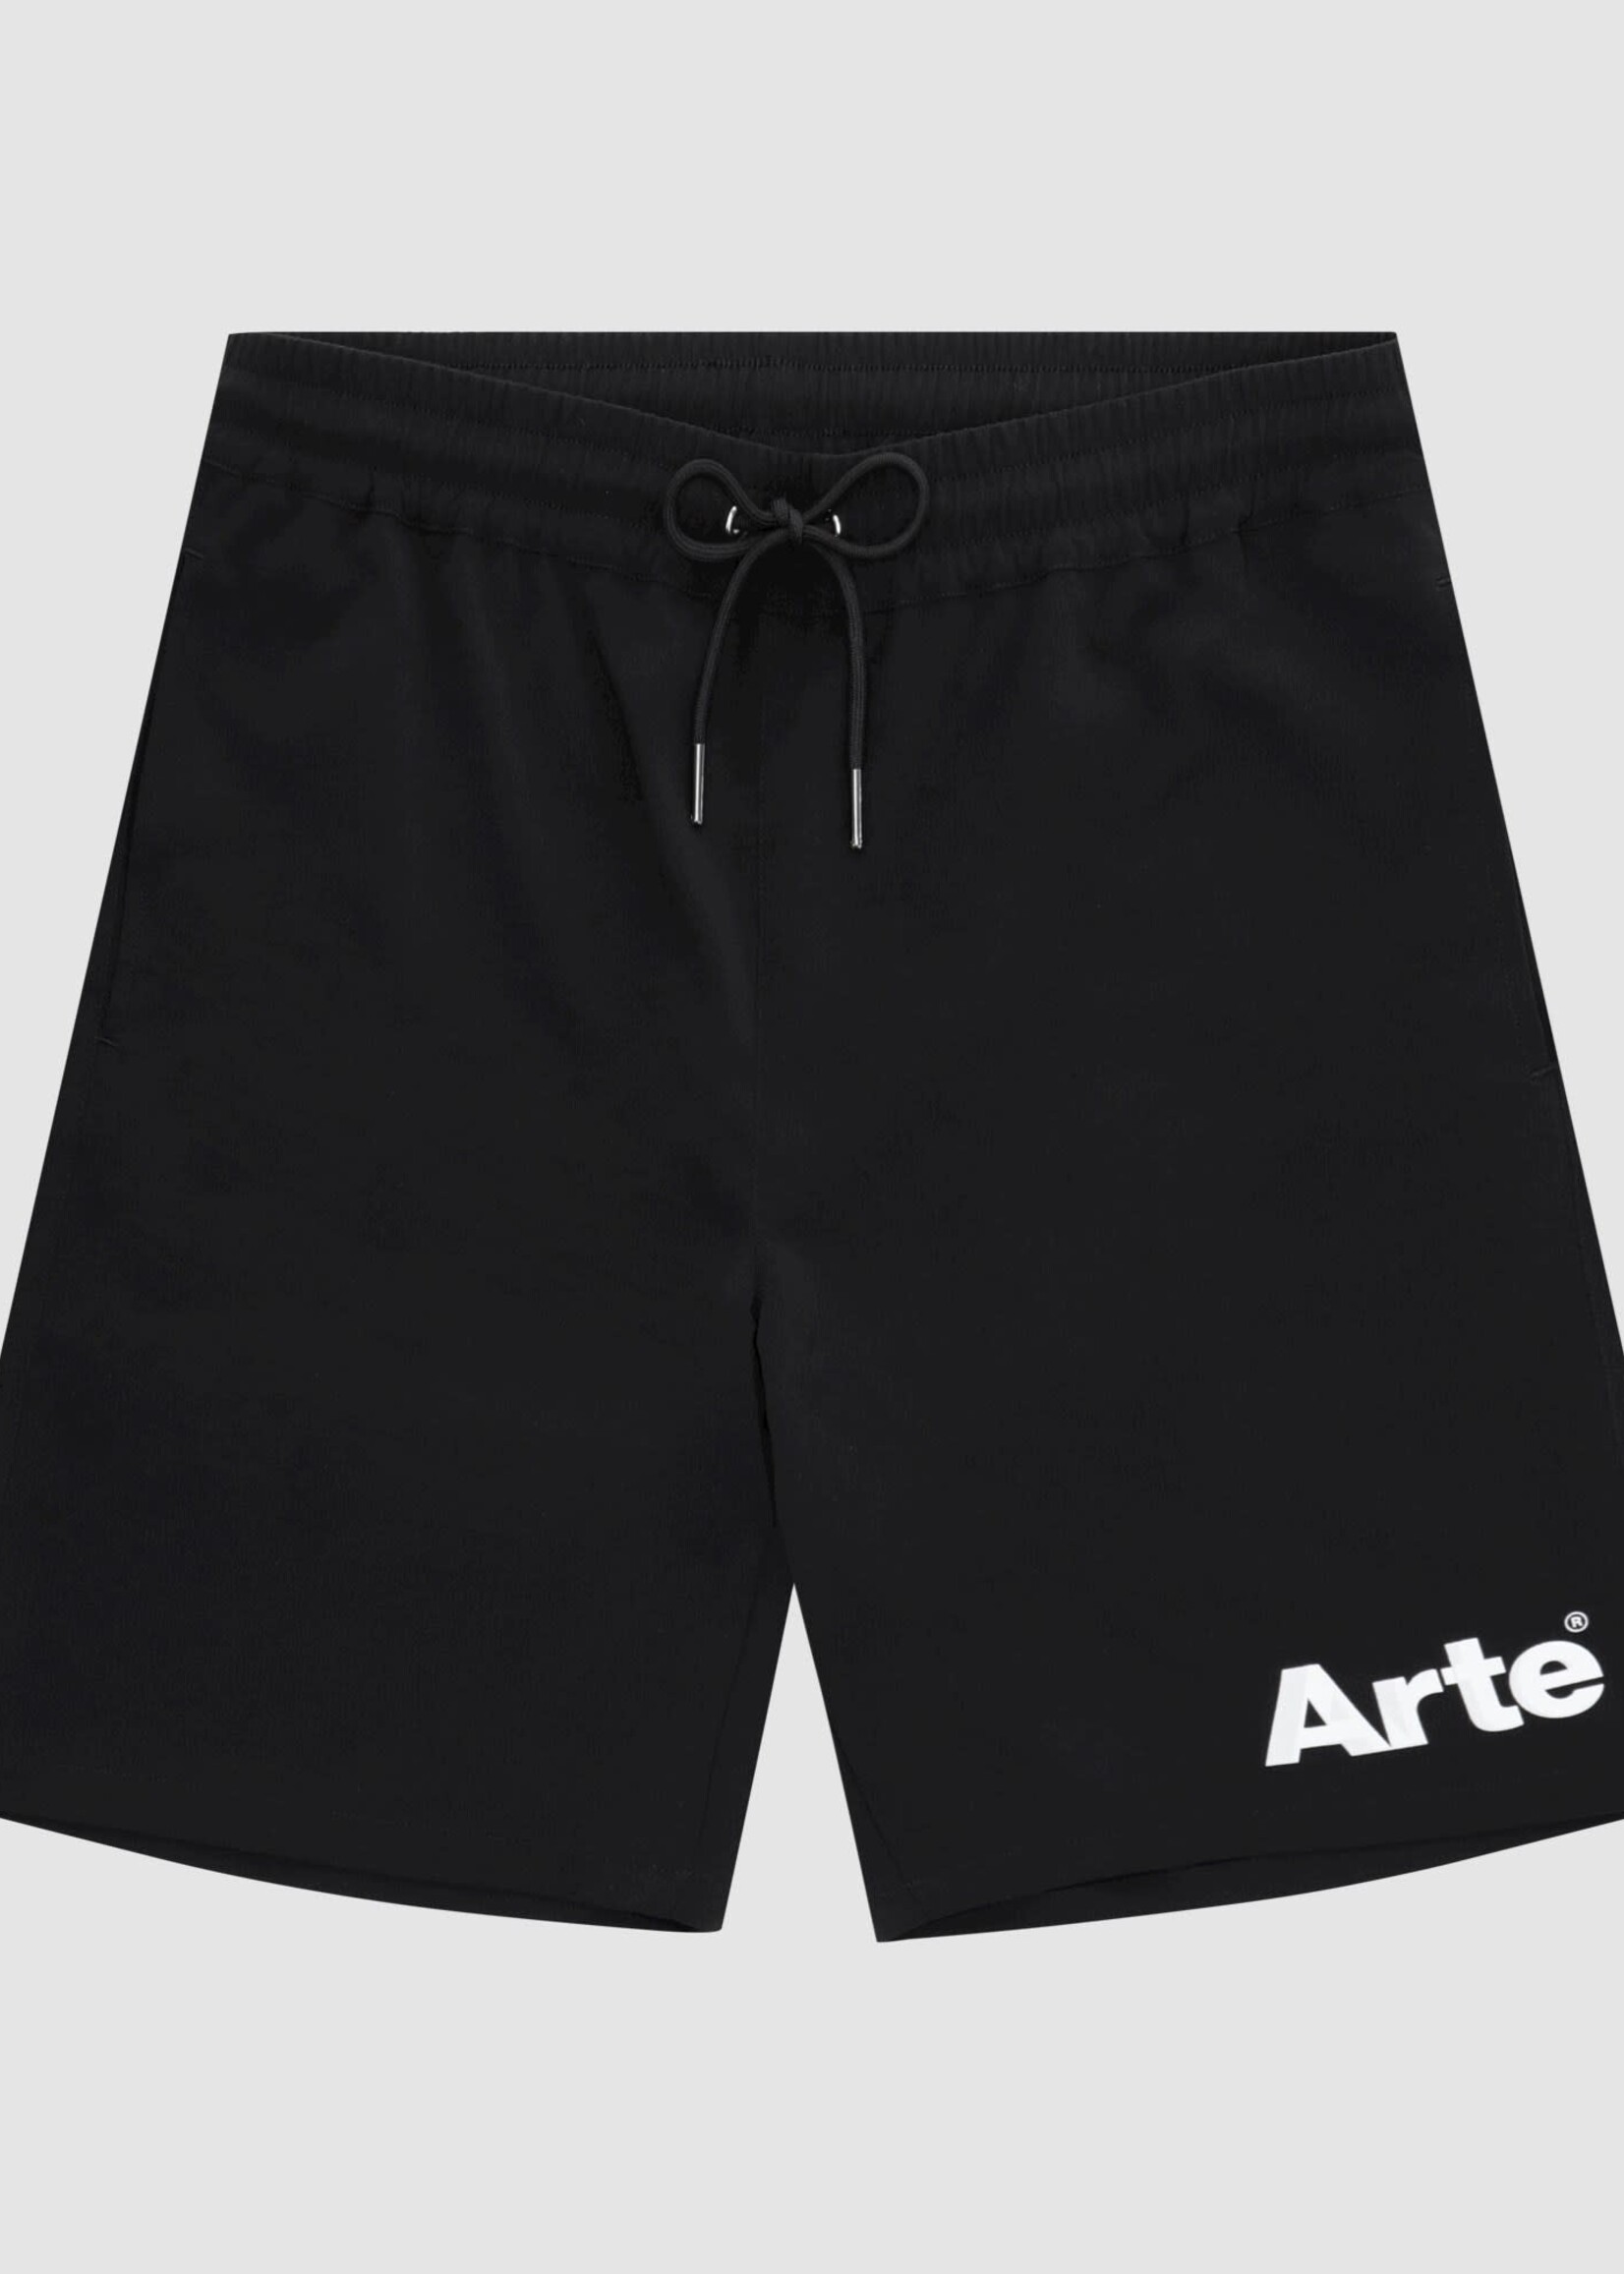 Arte Arte Samuel logo shorts black